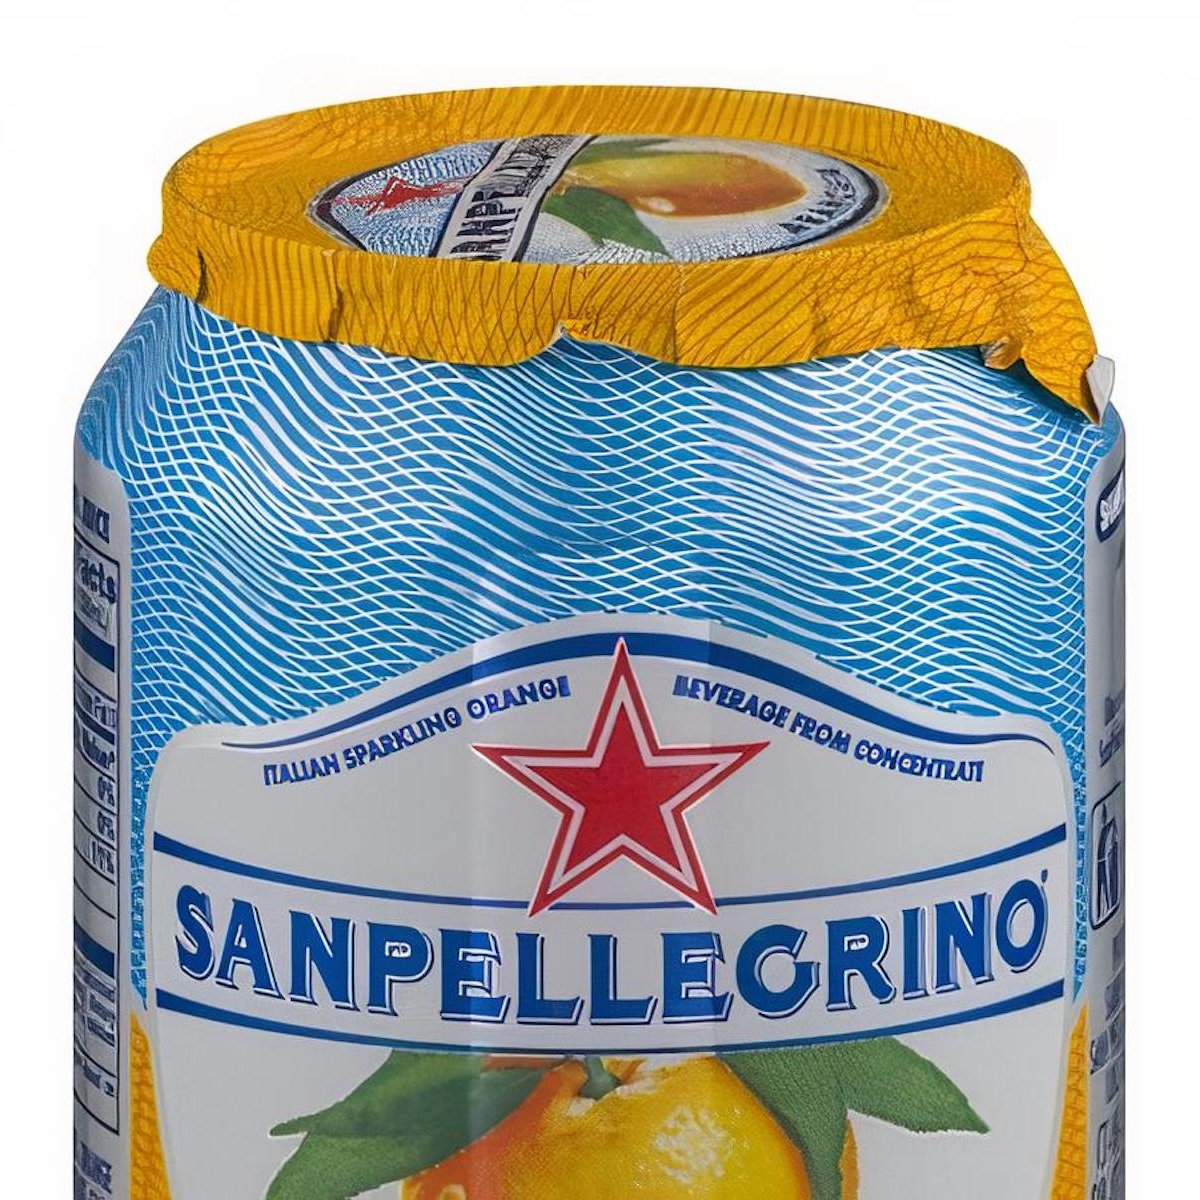 SanPellegrino Aranciata (Orange)